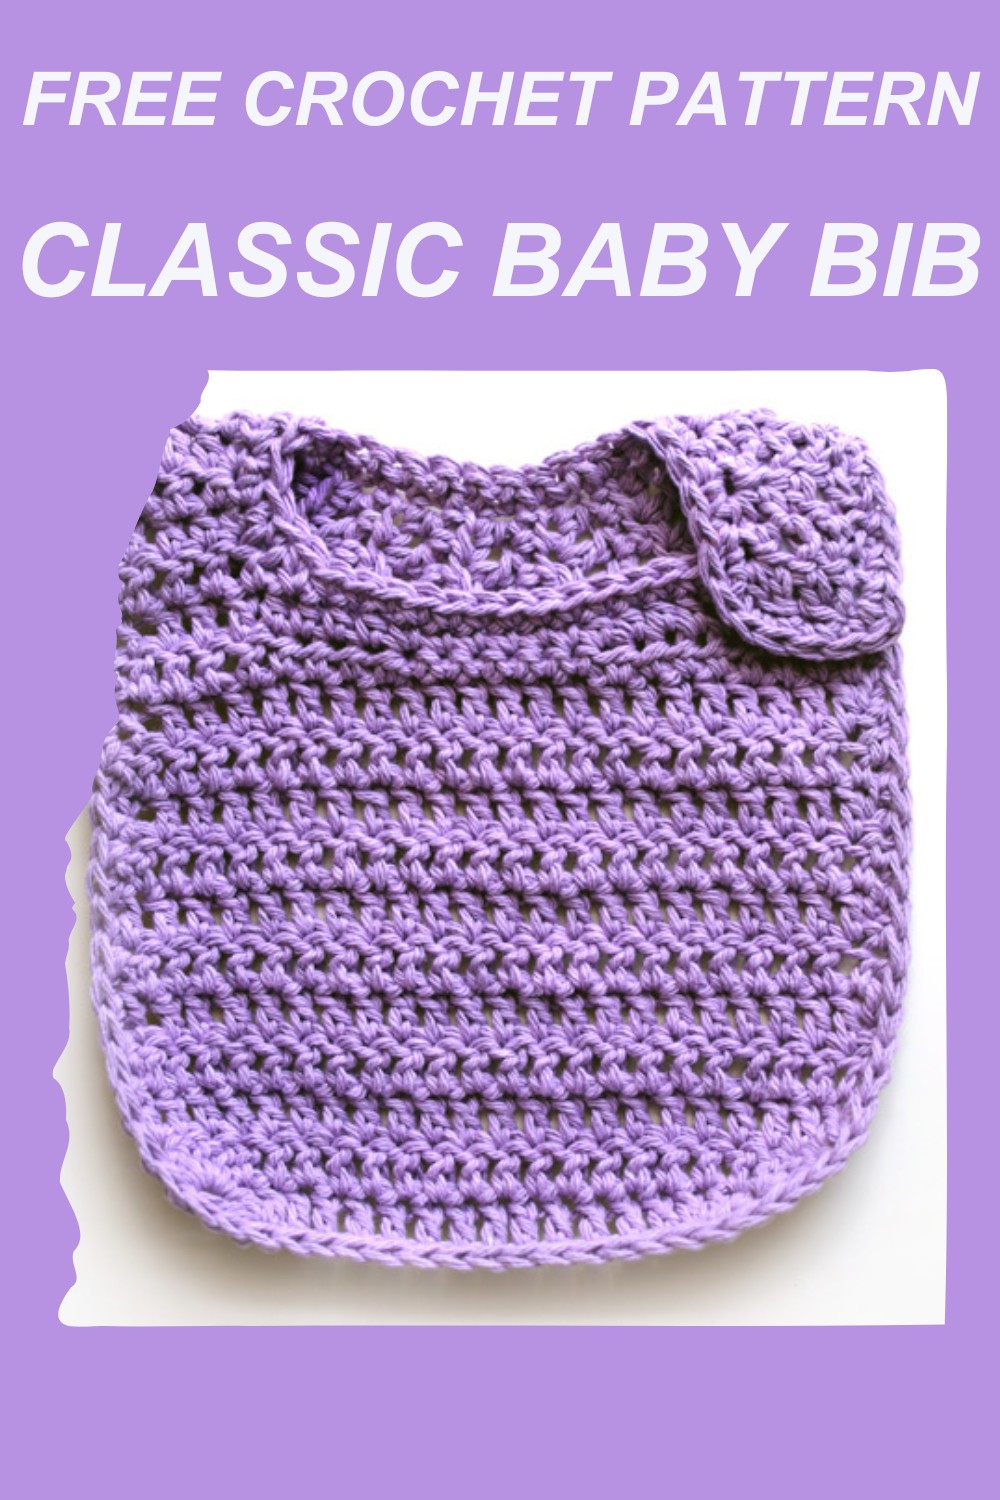 Free Crochet Pattern Classic Baby Bib